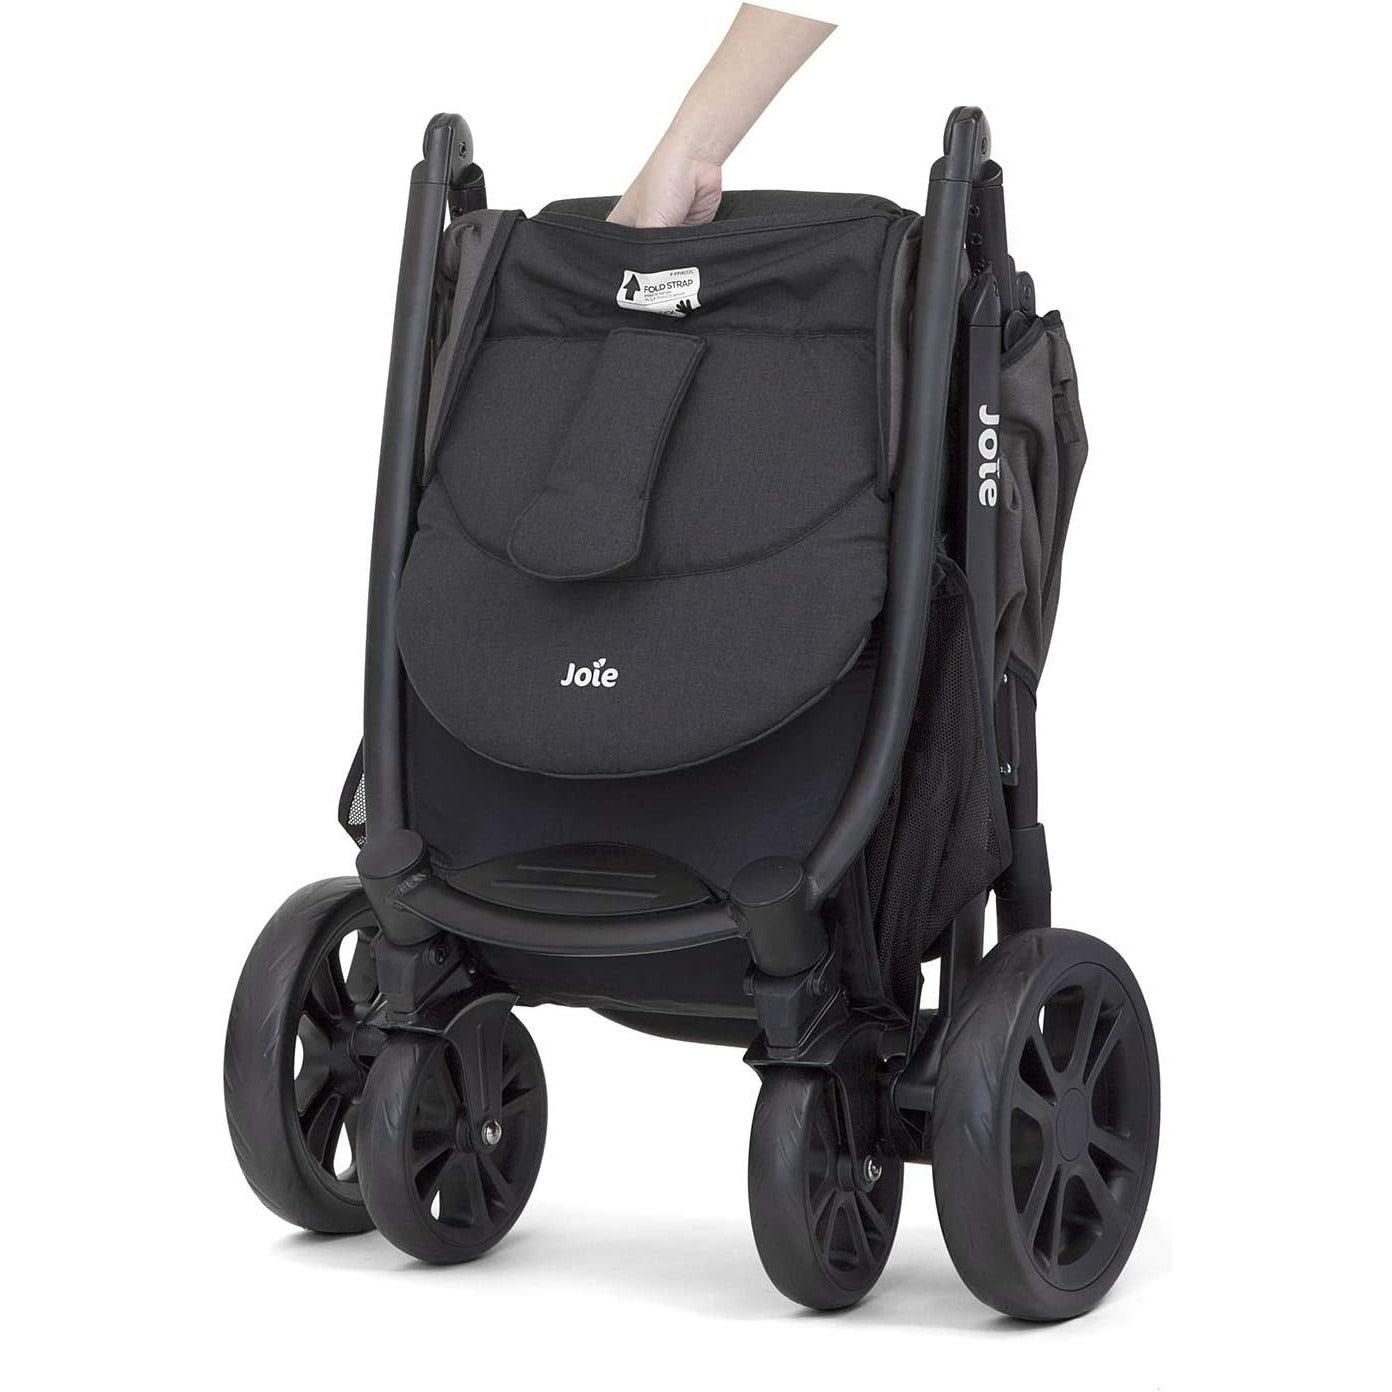 Joie Meet Litetrax 4 Coal Travel System Baby Stroller - Ourkids - Joie